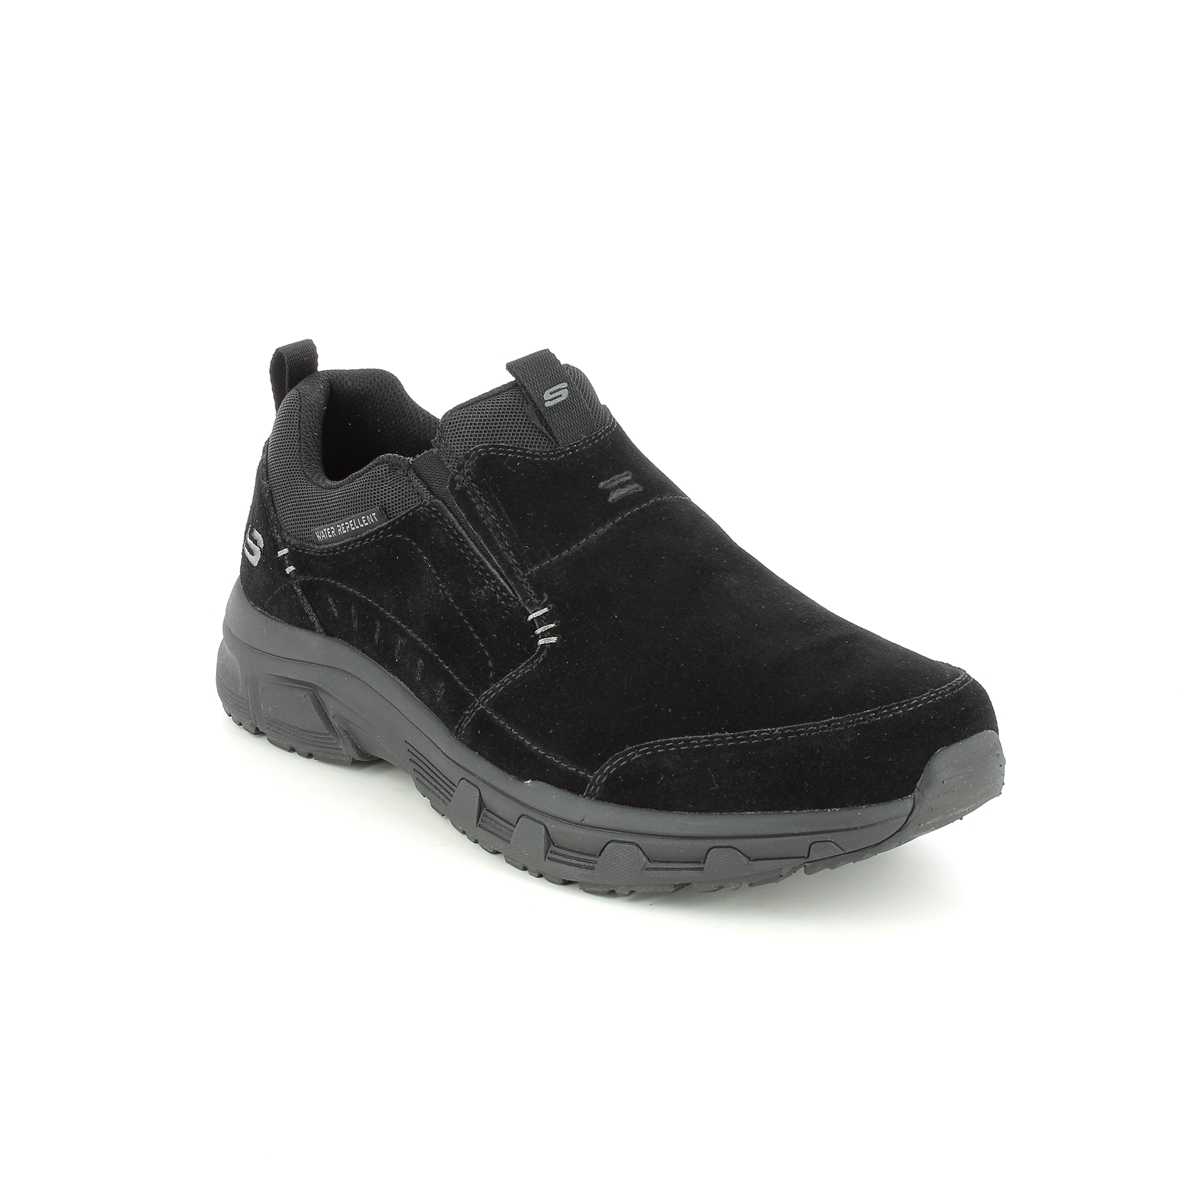 Skechers Oak Canyon Slip On Relaxed BBK Black Mens Slip-on Shoes 237282 in a Plain Leather in Size 10